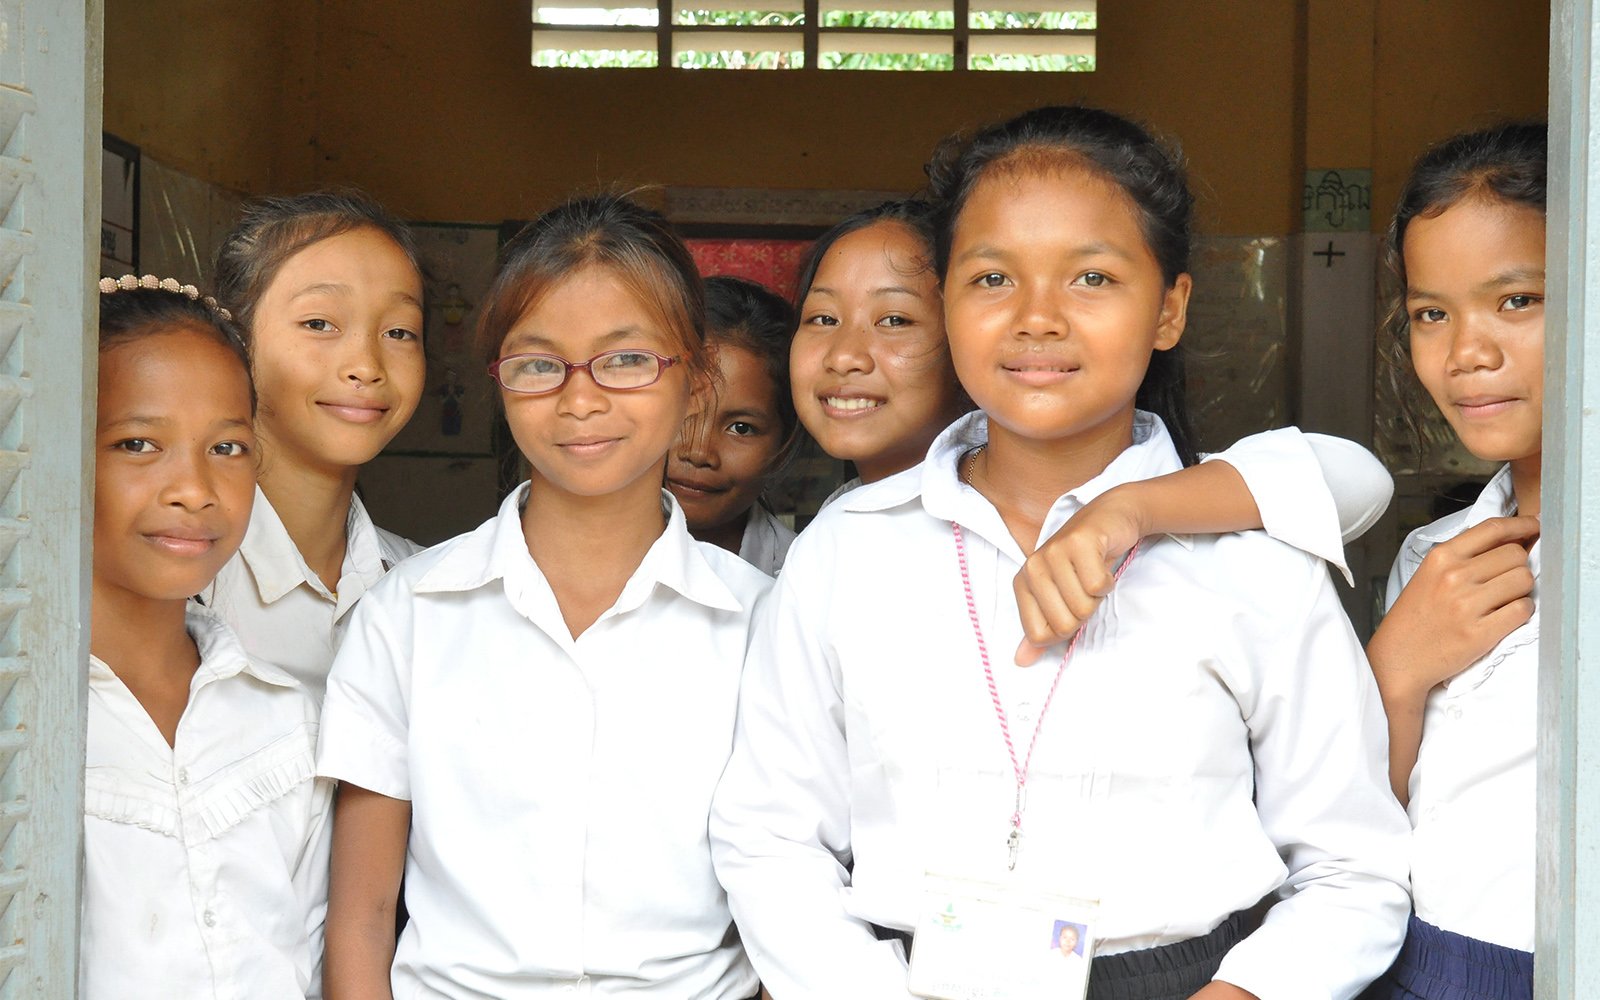 Cambodia girls at school